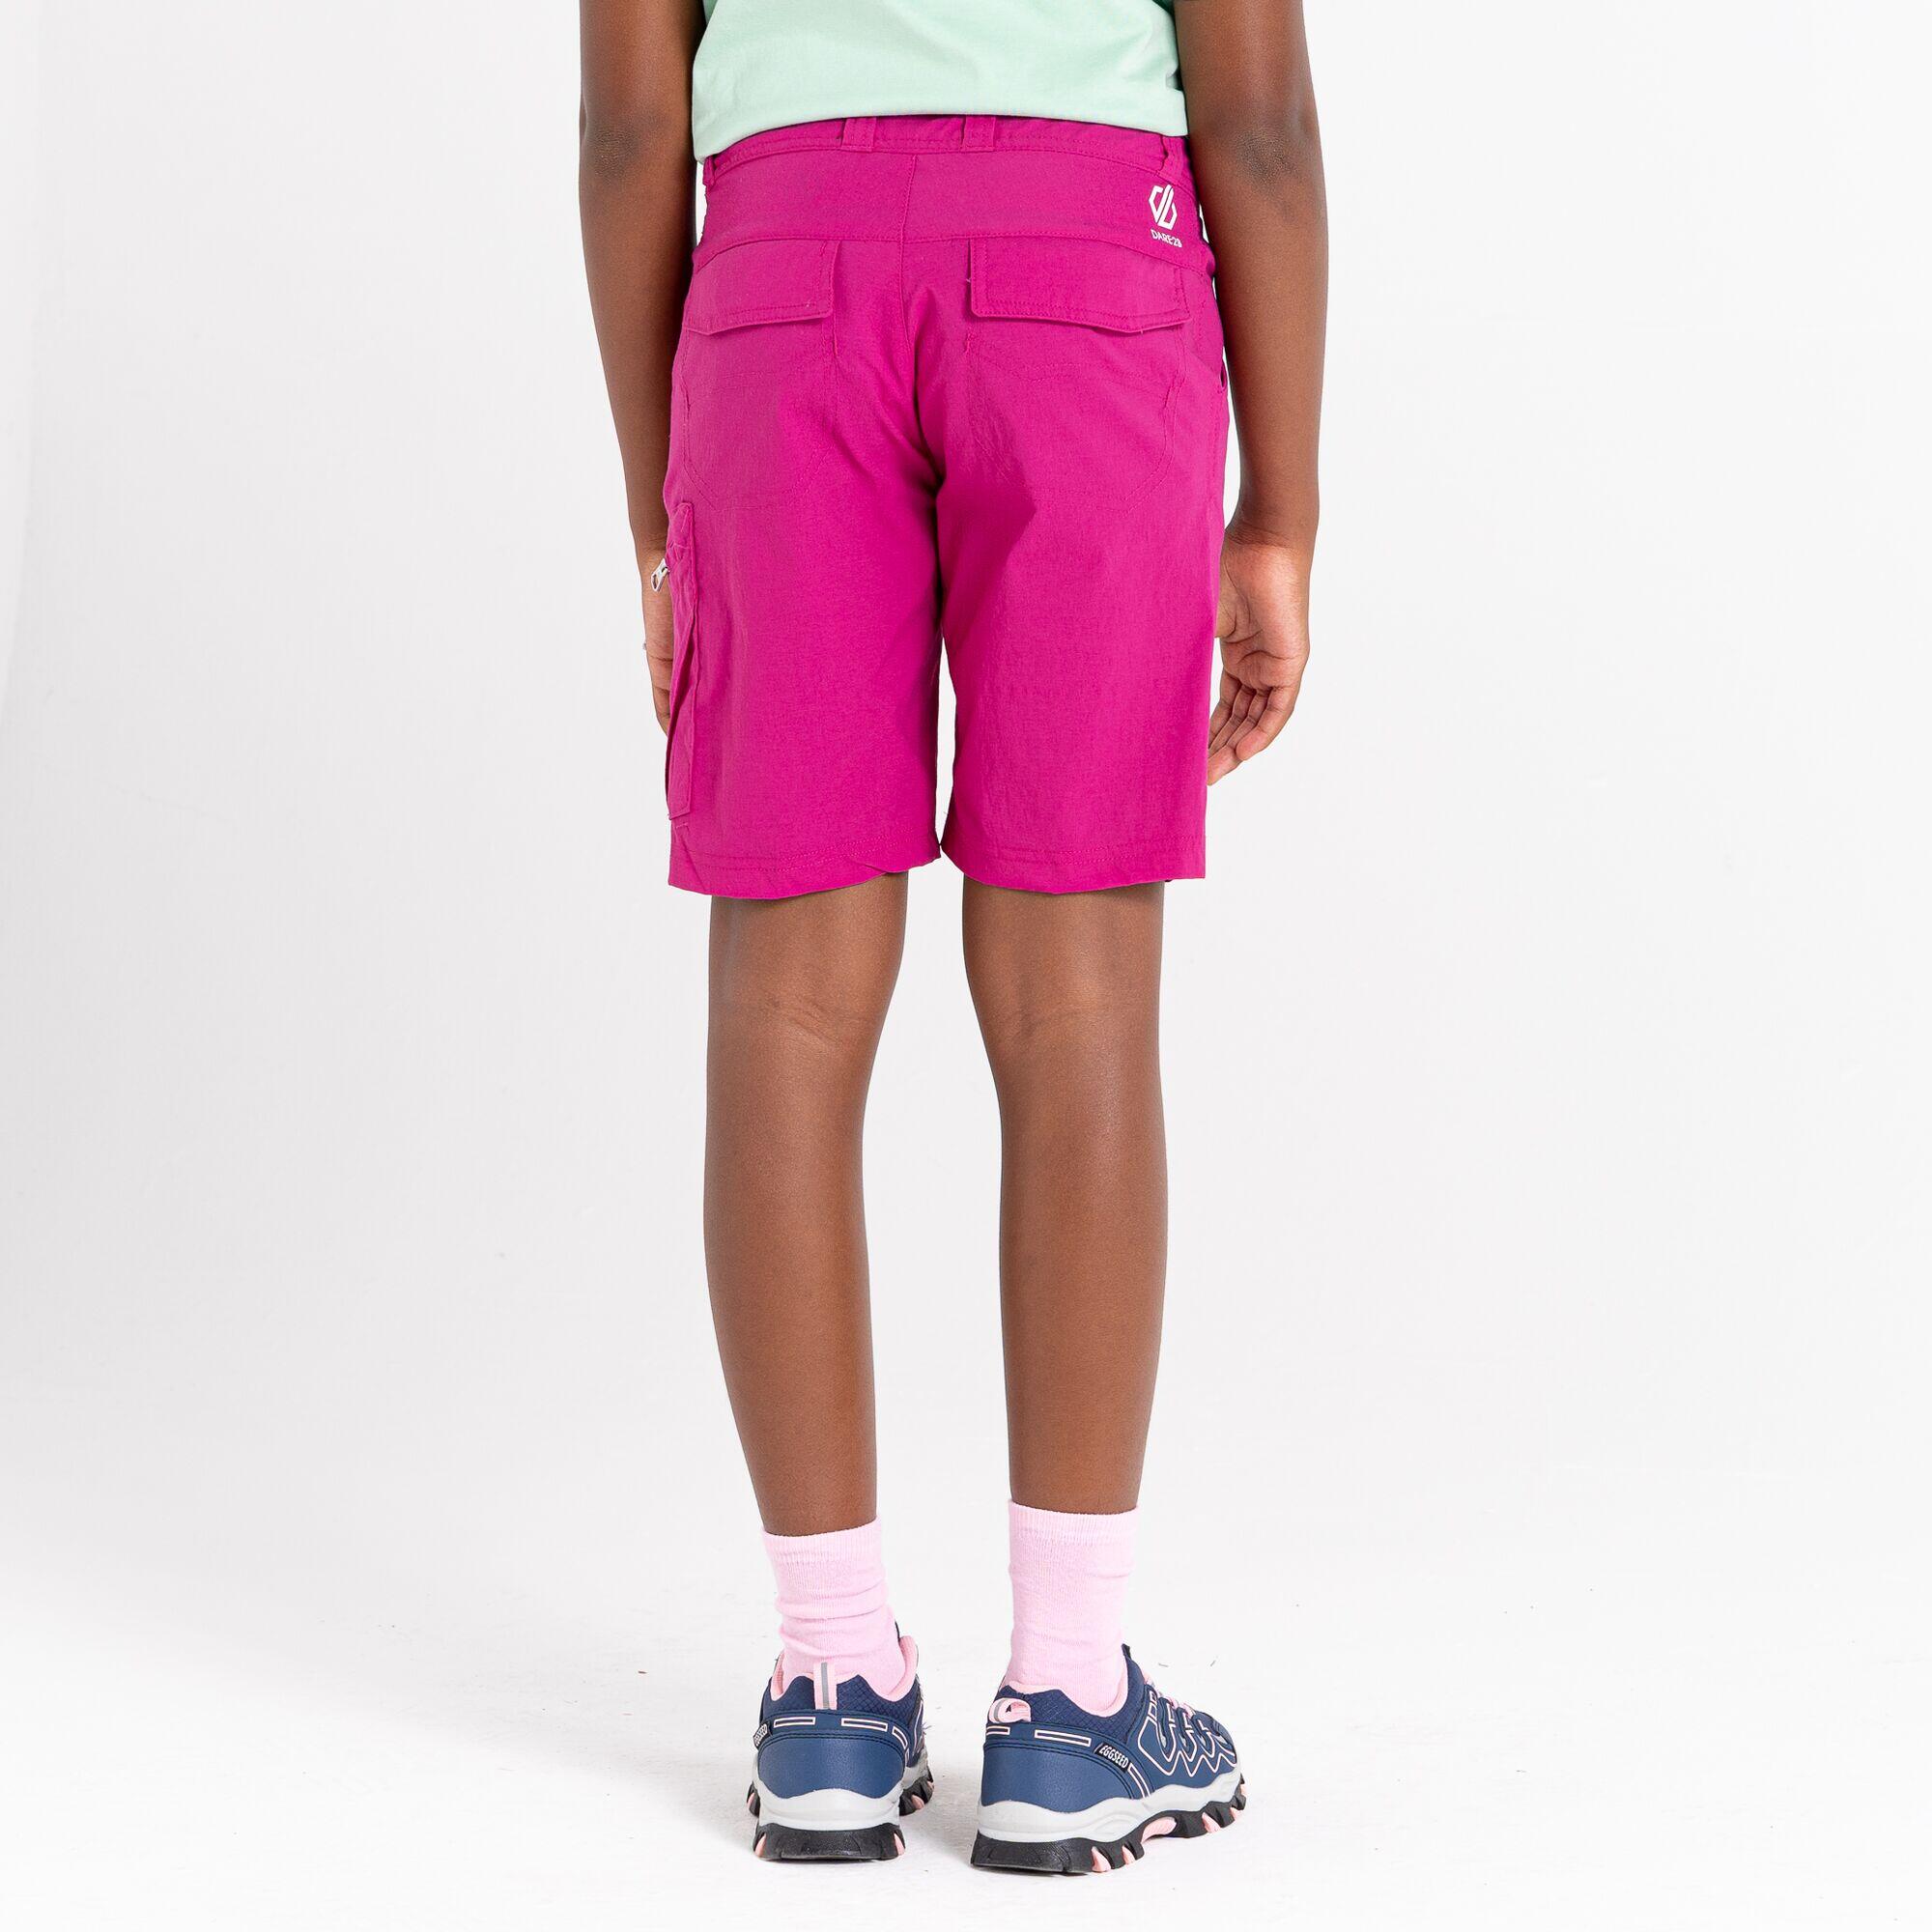 Reprise II Kids Hiking Shorts - Fuchsia Pink 3/5